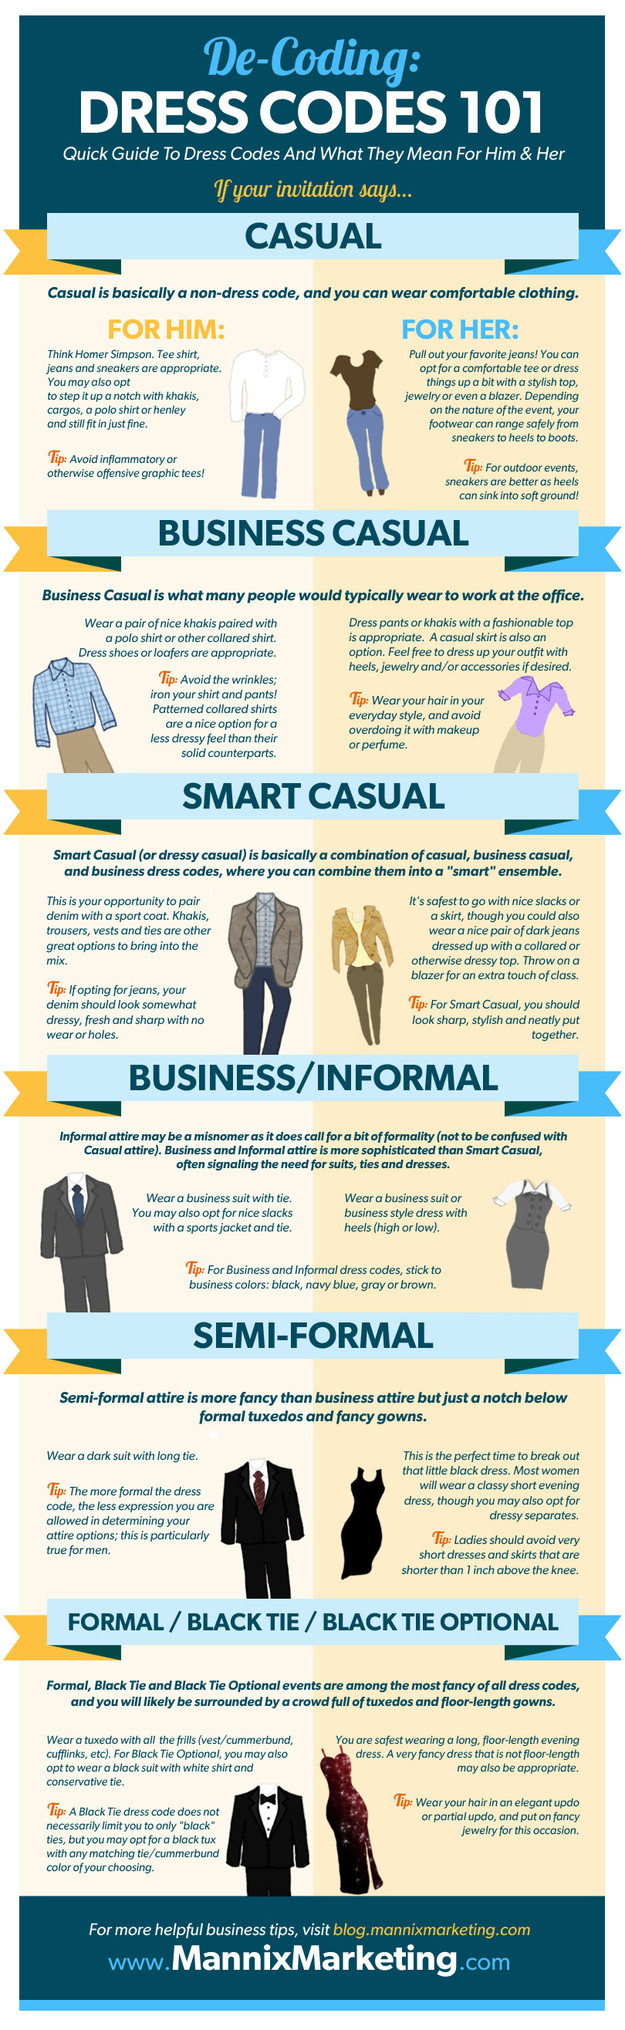 smart casual vs business casual - DeCoding Dress Codes 101 ca Casual Business Casual Smart Casual BusinessInformal SemiFormal Formal Black TieBlack The Optional Mannix Marketing.com